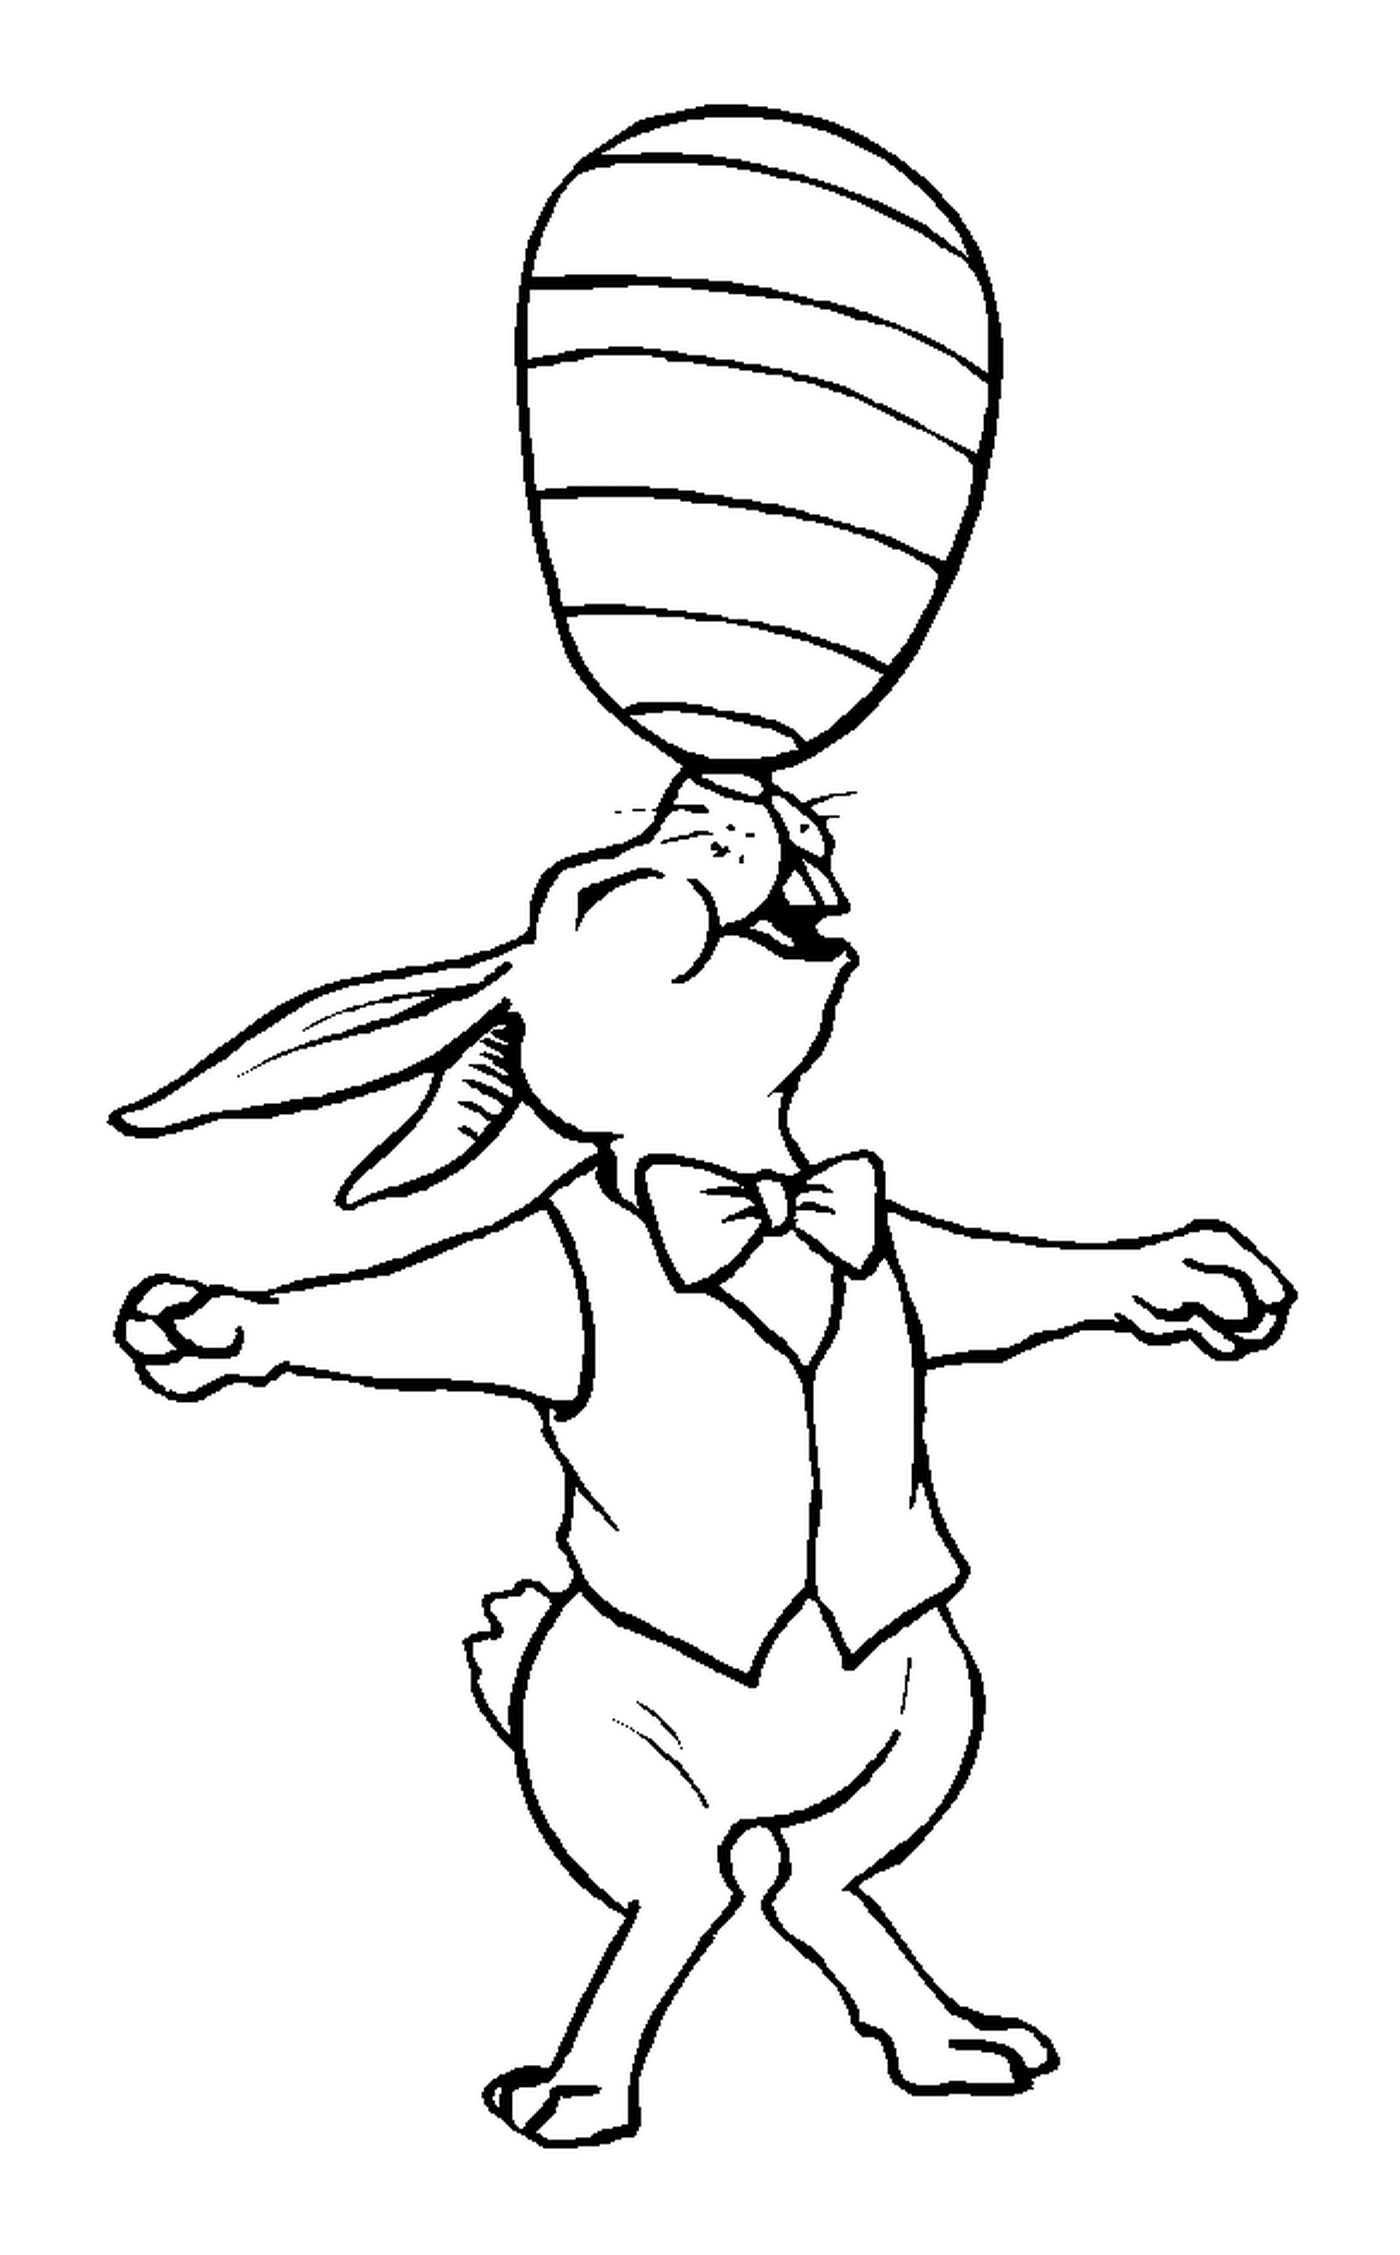  Rabbit acrobate with balloon 